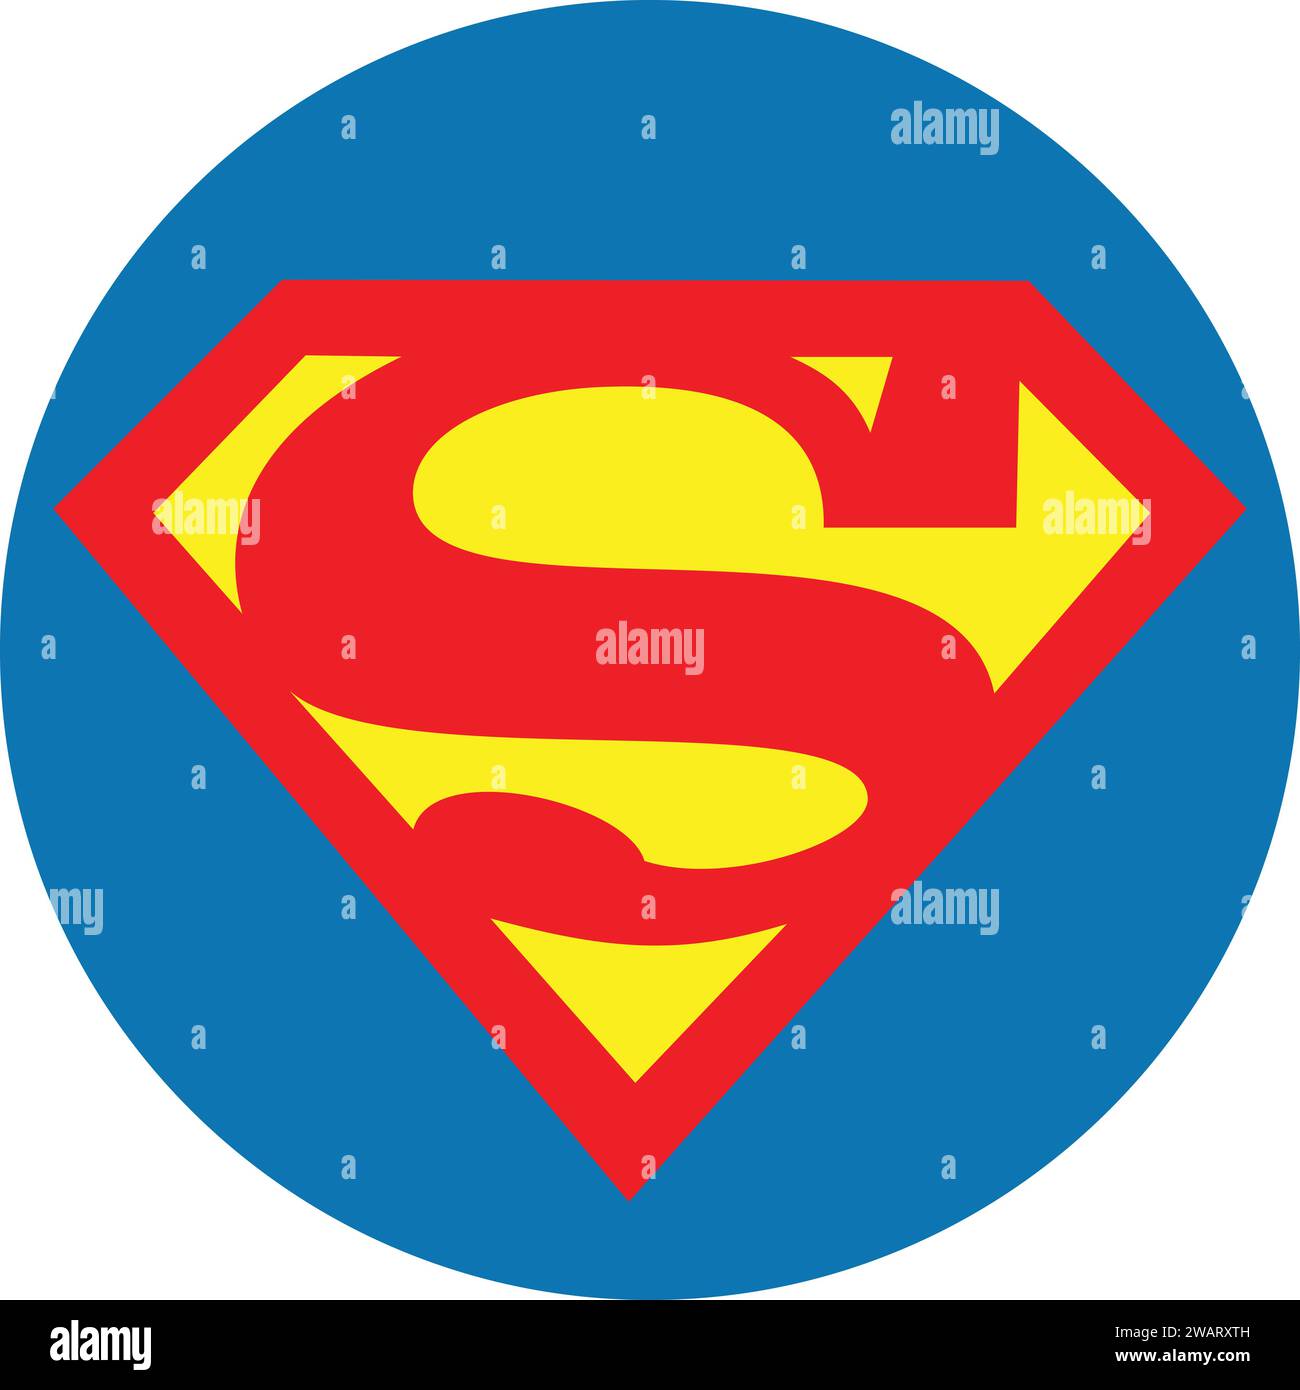 Superman logo | Superman icon, symbol of power hero super man | t shirt costume print logo printed Stock Vector